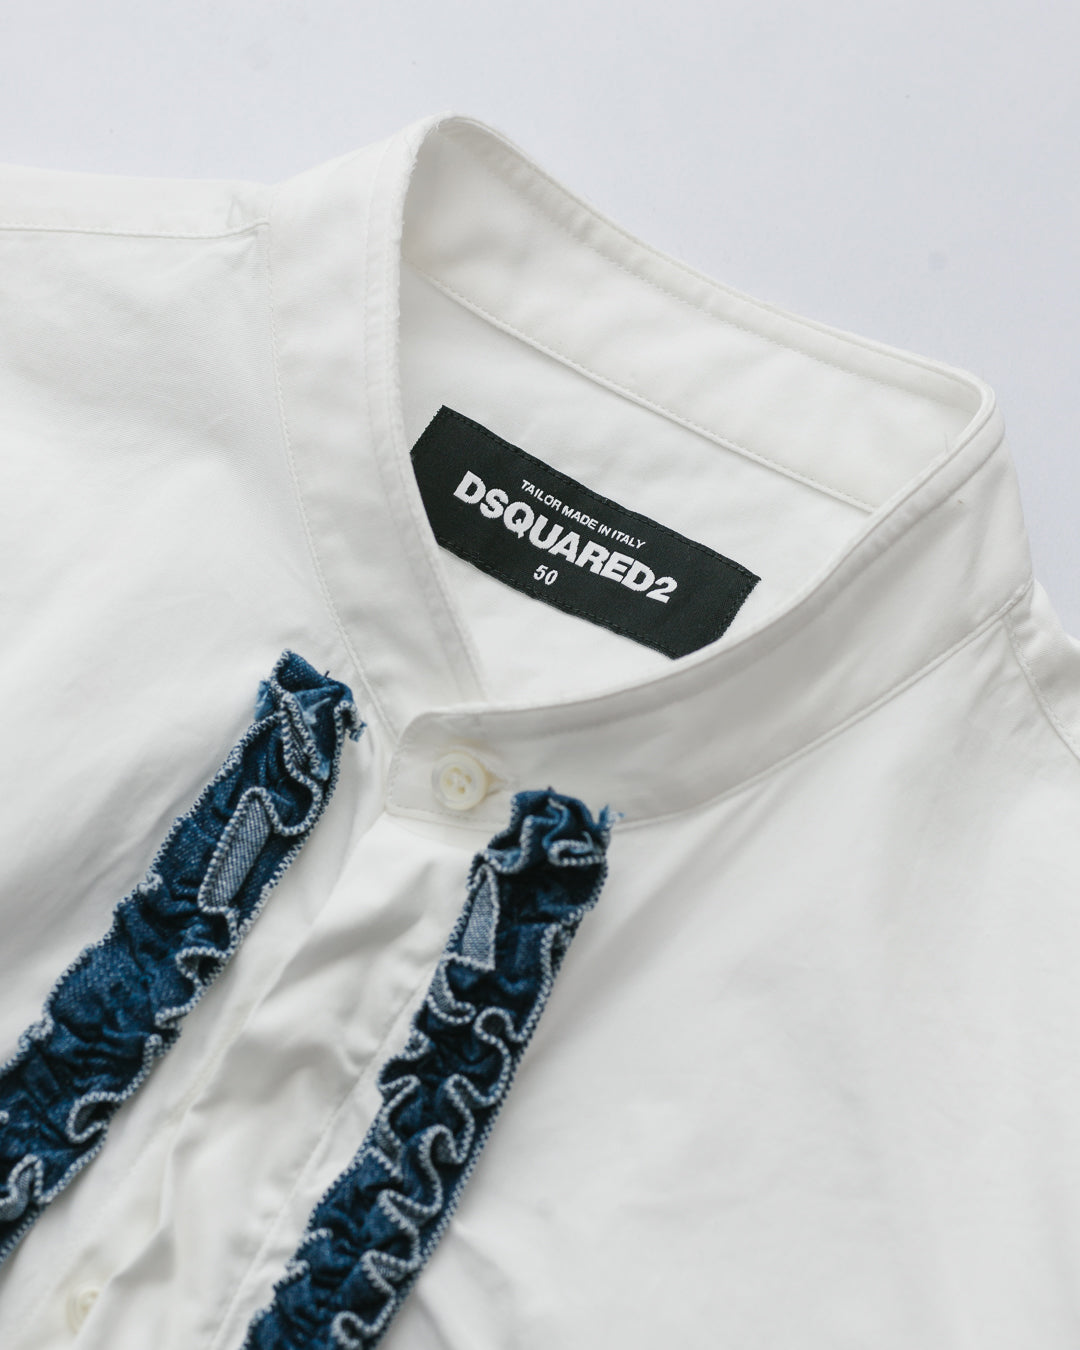 DSquared Shirt with Denim Details